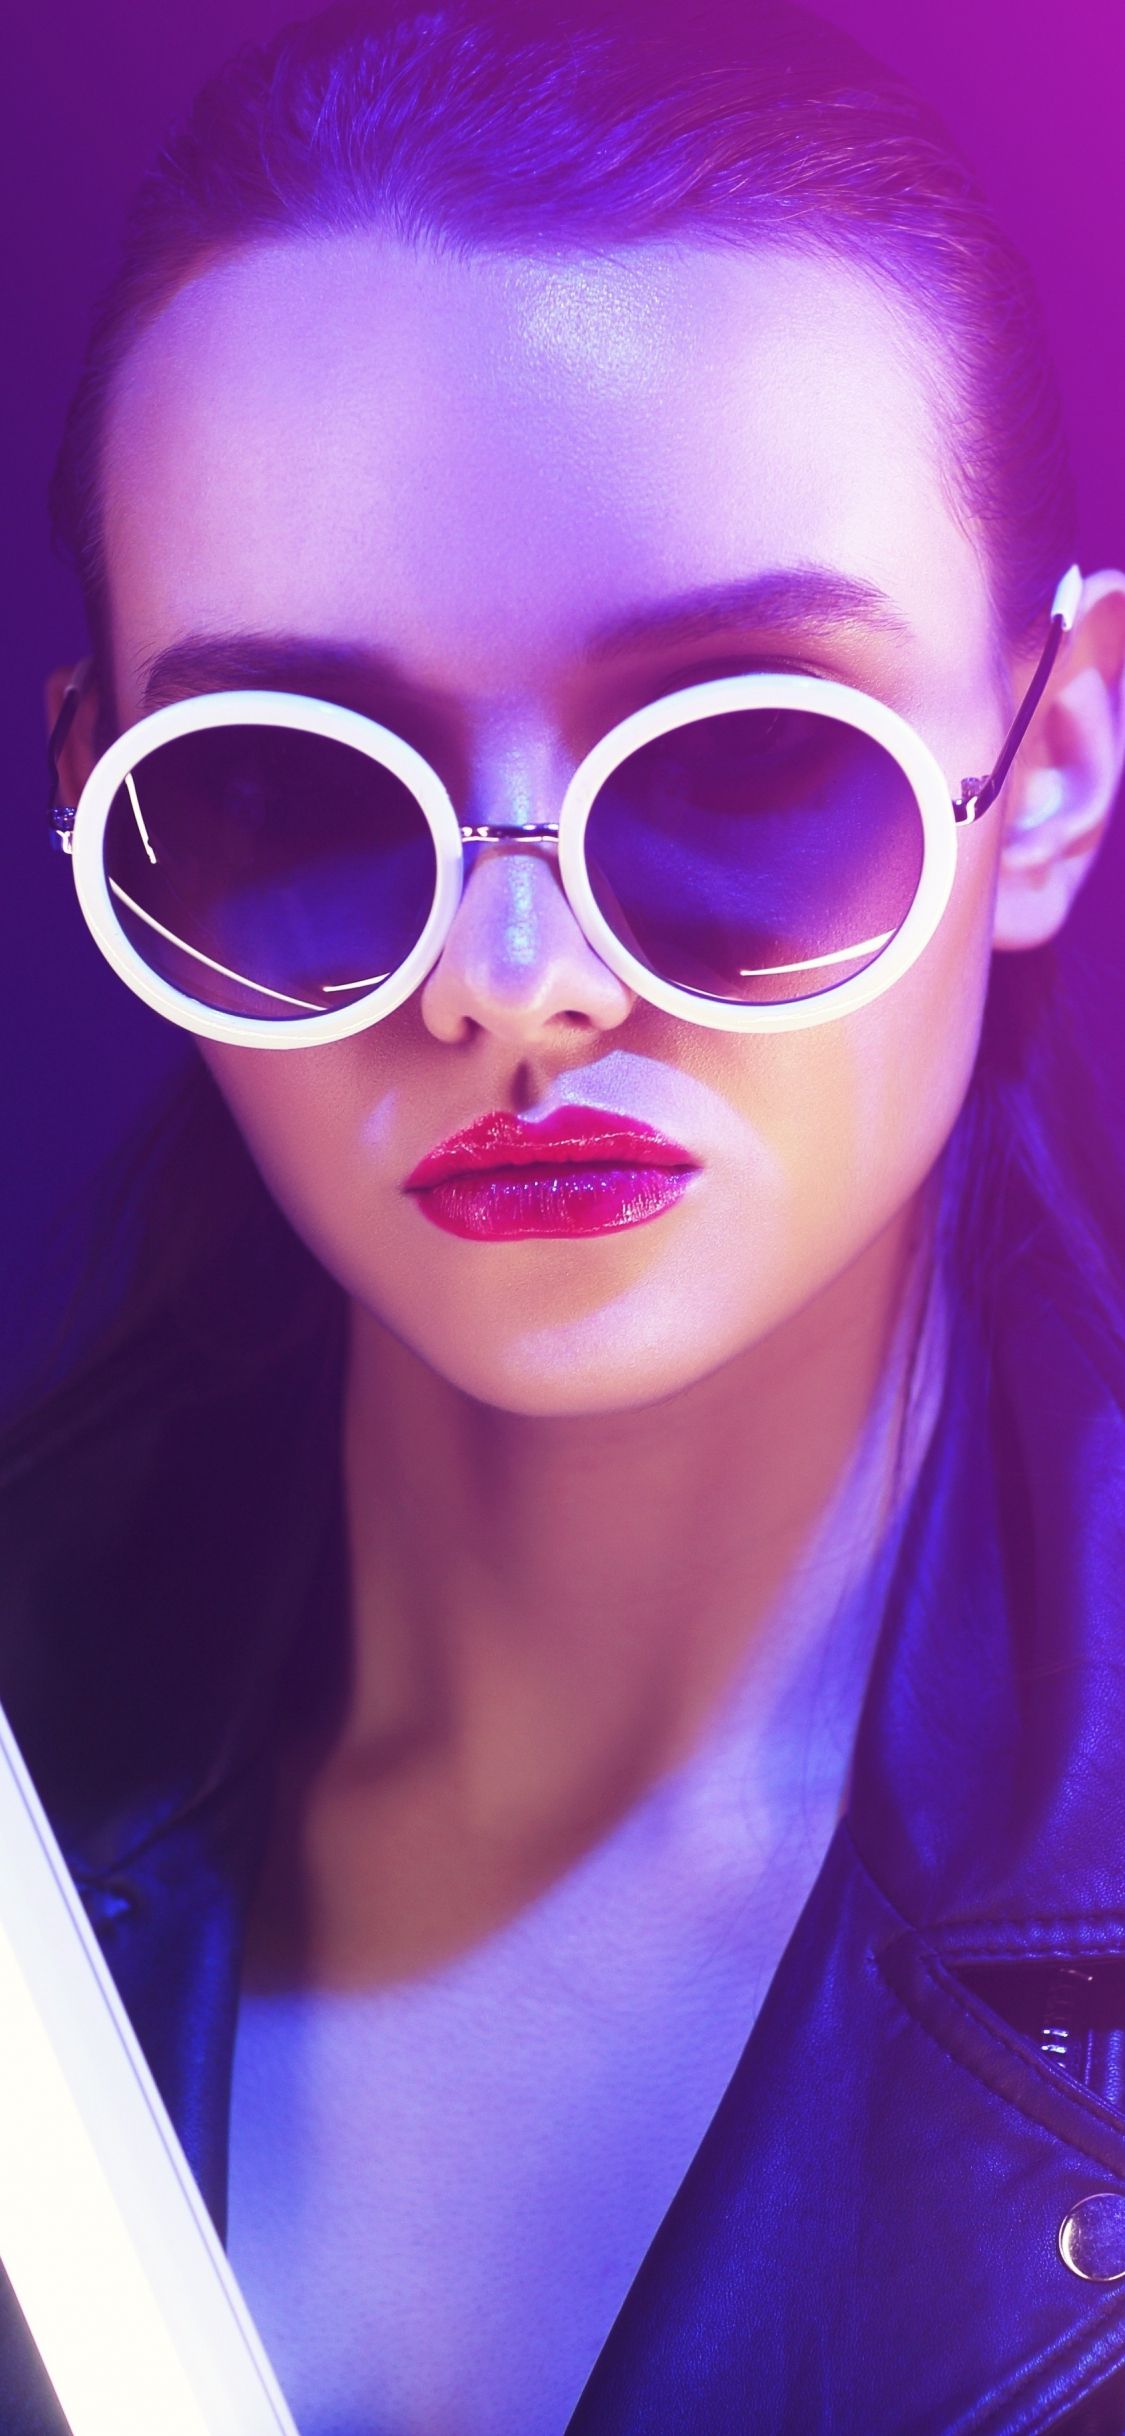 Download 1125x2436 wallpaper sunglasses, woman model, neon lights, iphone x 1125x2436 HD image, background, 5828